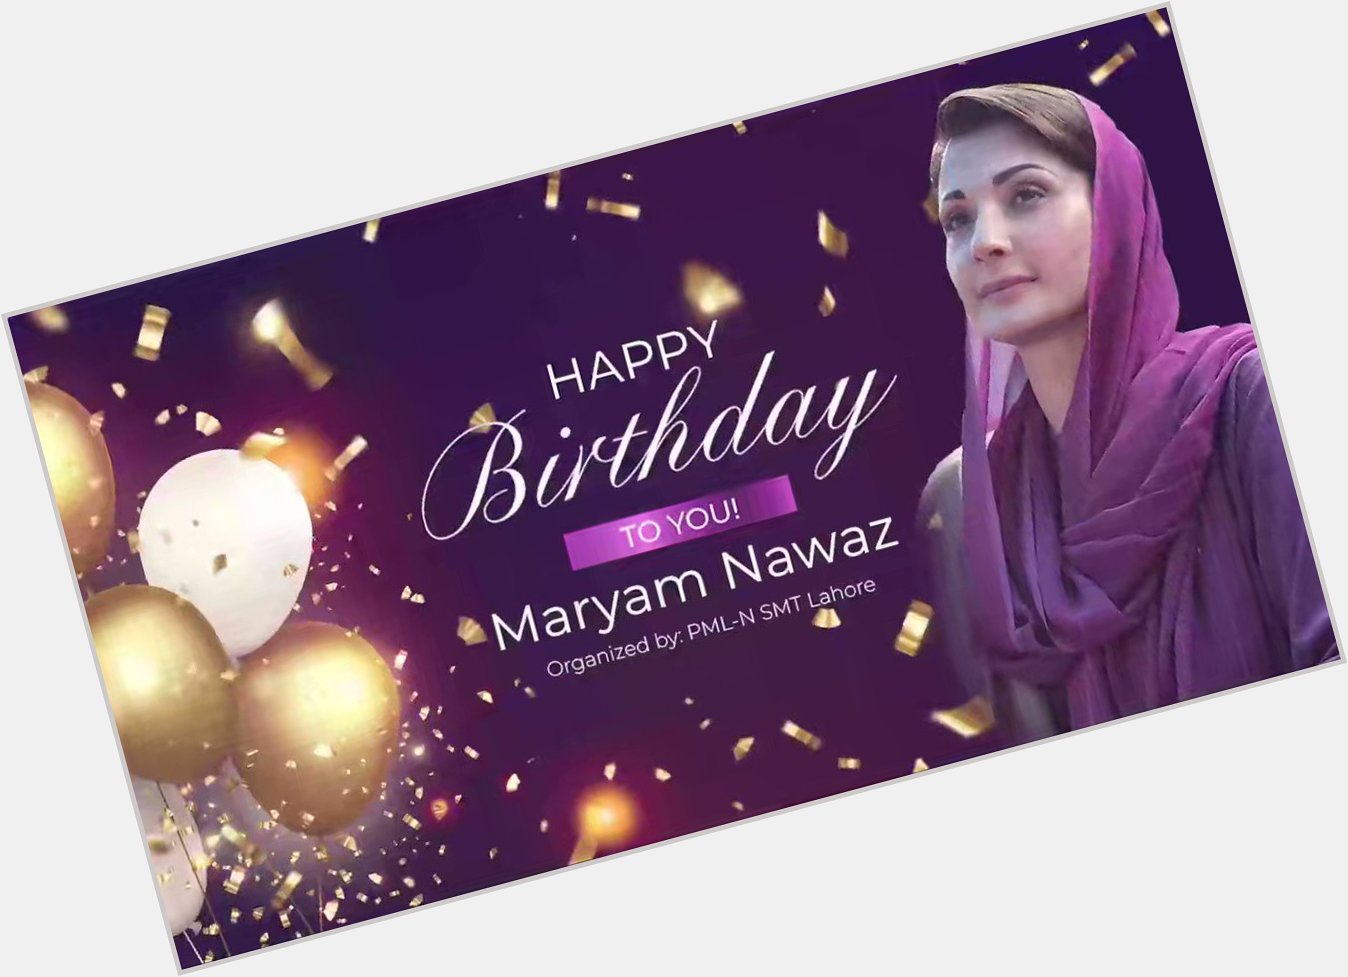 Happy Birthday Boss Maryam Nawaz Sharif.
Lots of prayers for you     